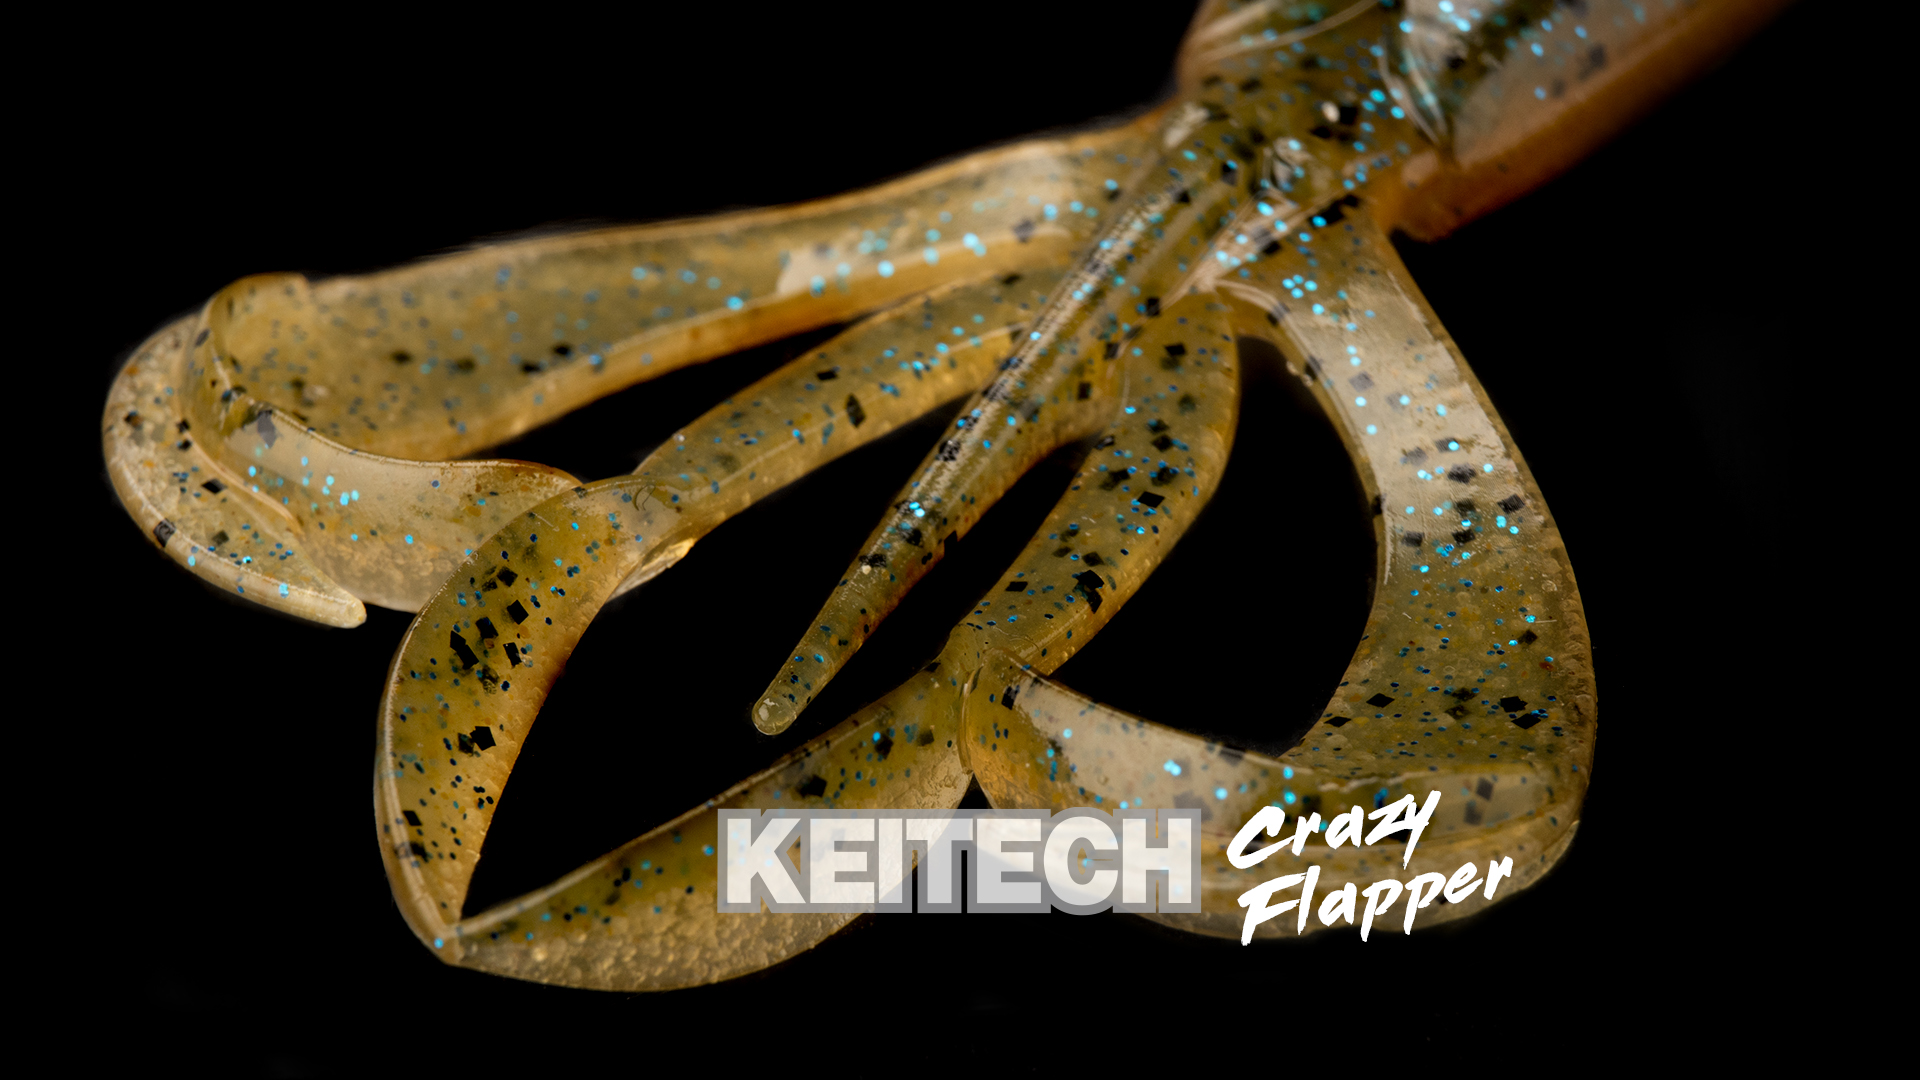 Keitech Crazy Flapper 3,6 in (9,1cm)